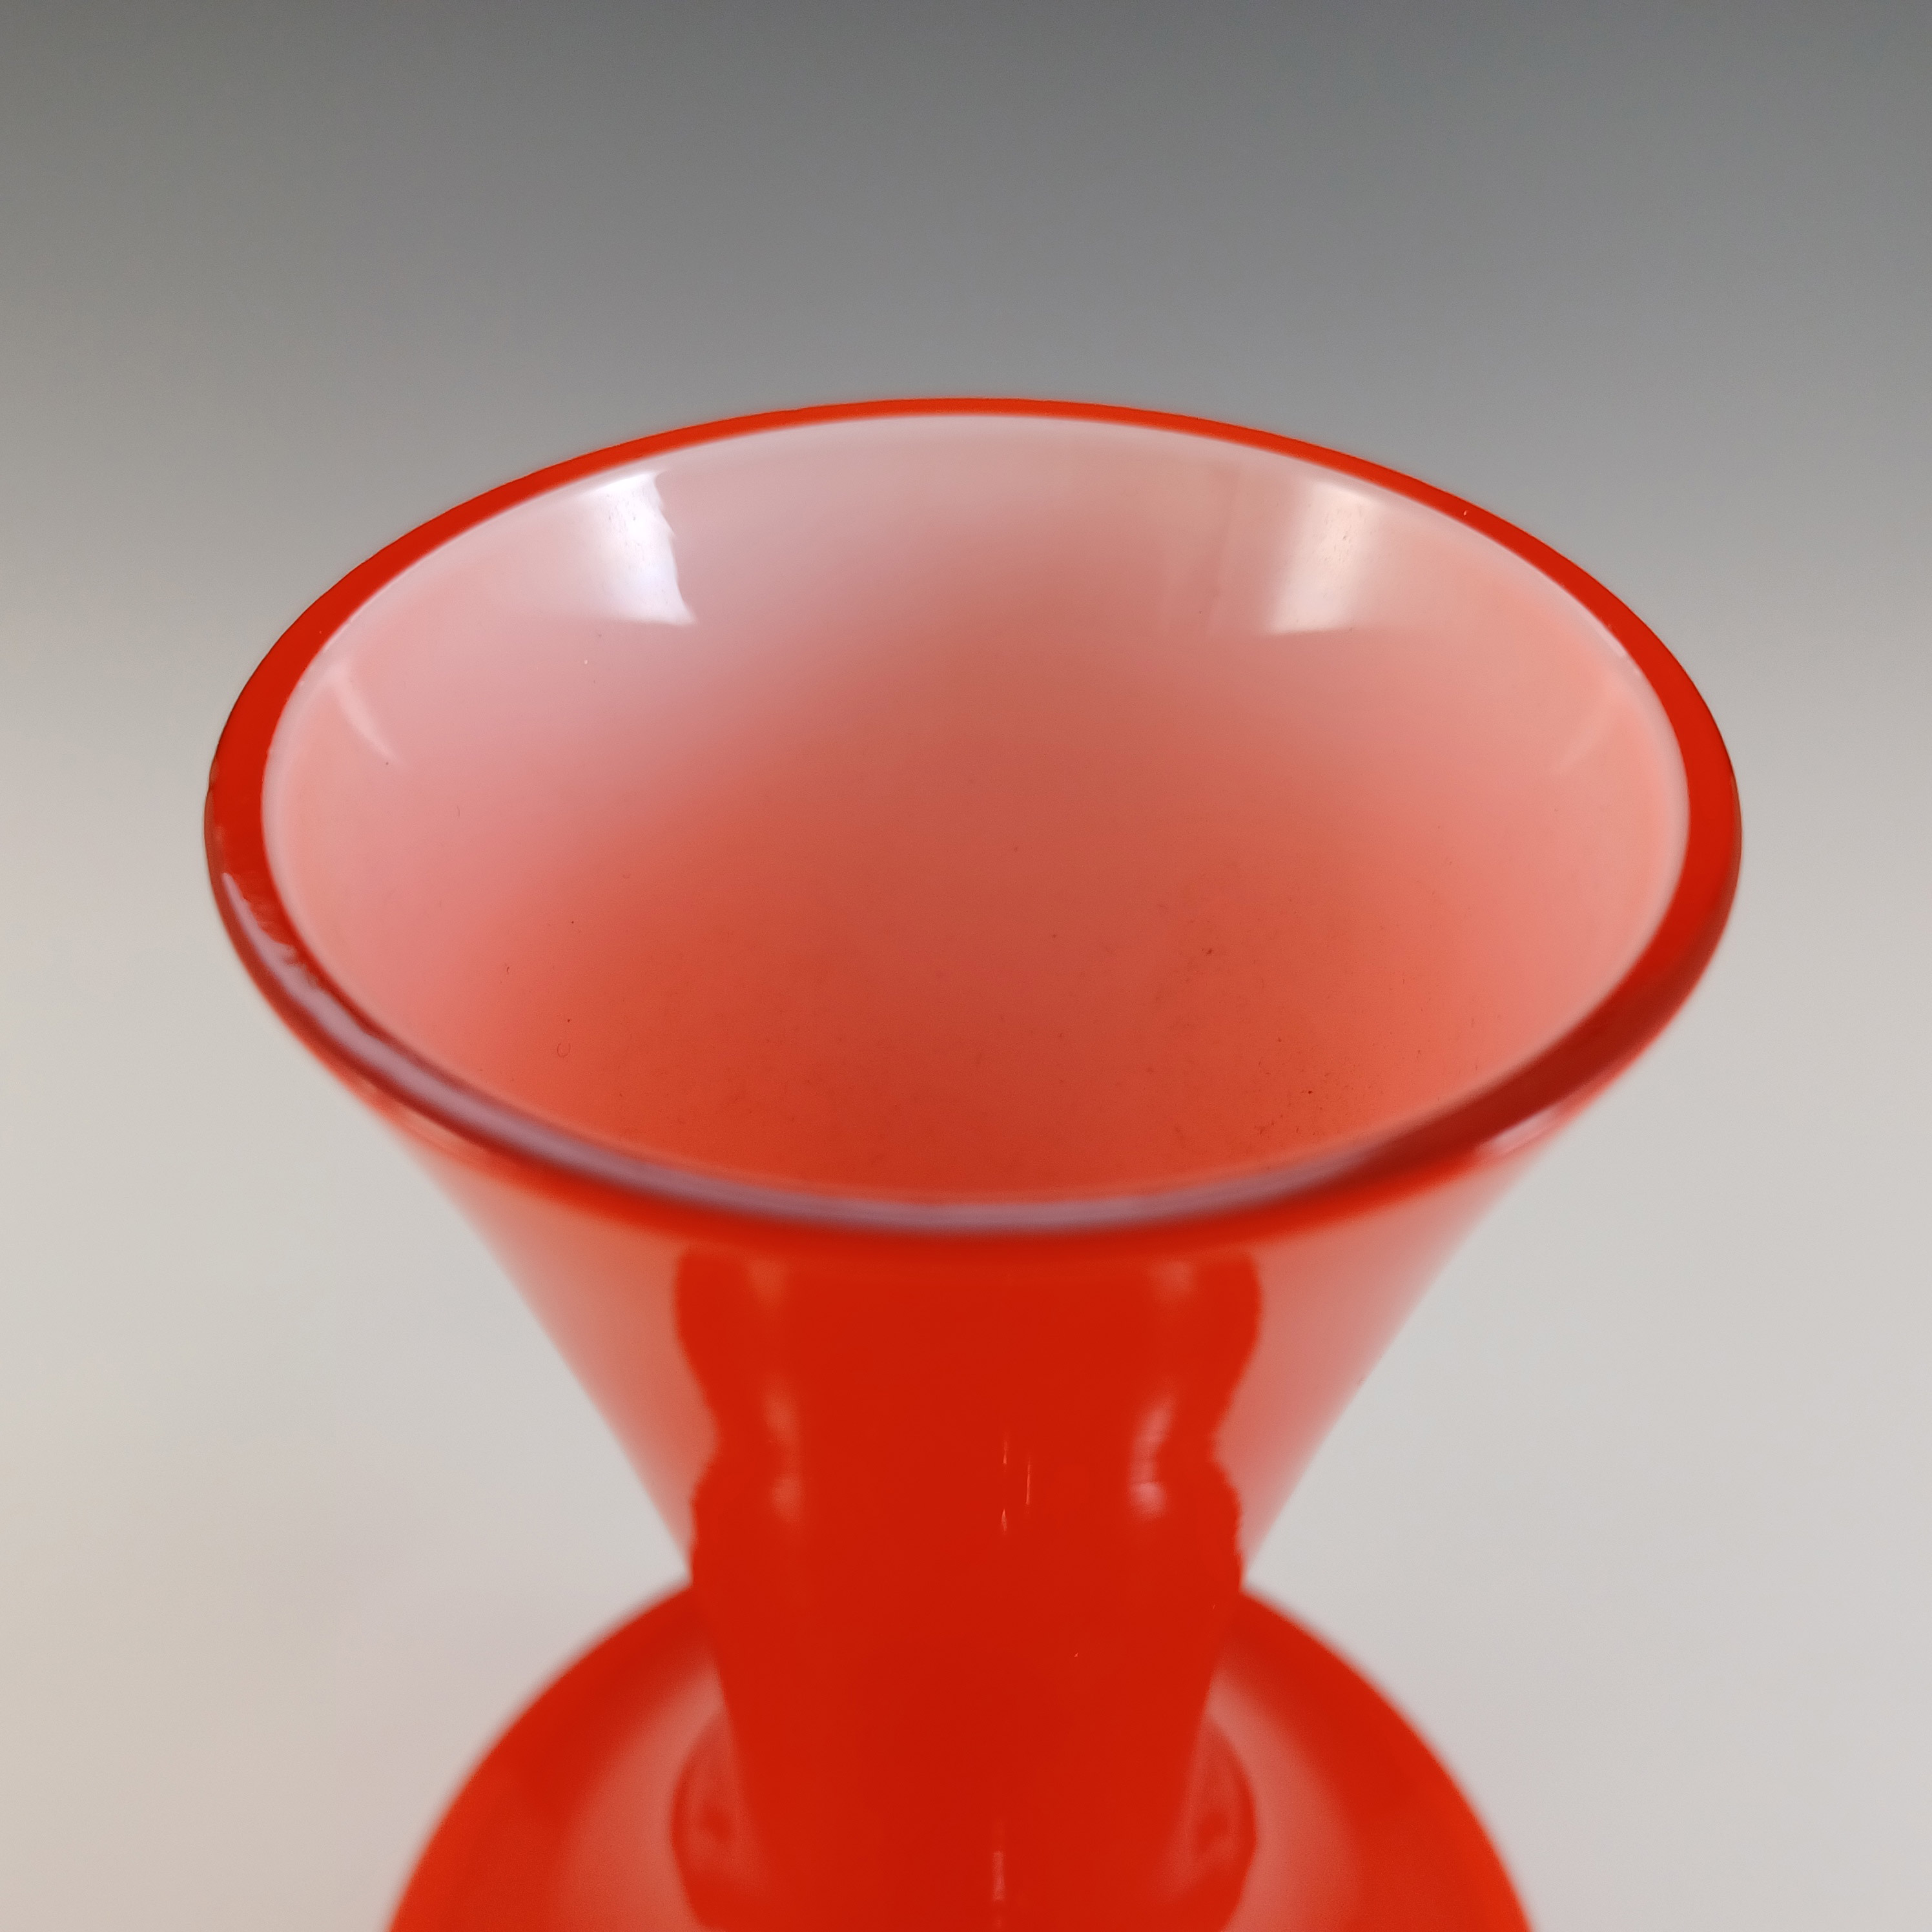 Lindshammar / JC 1970's Swedish Red Cased Glass Vase - Click Image to Close